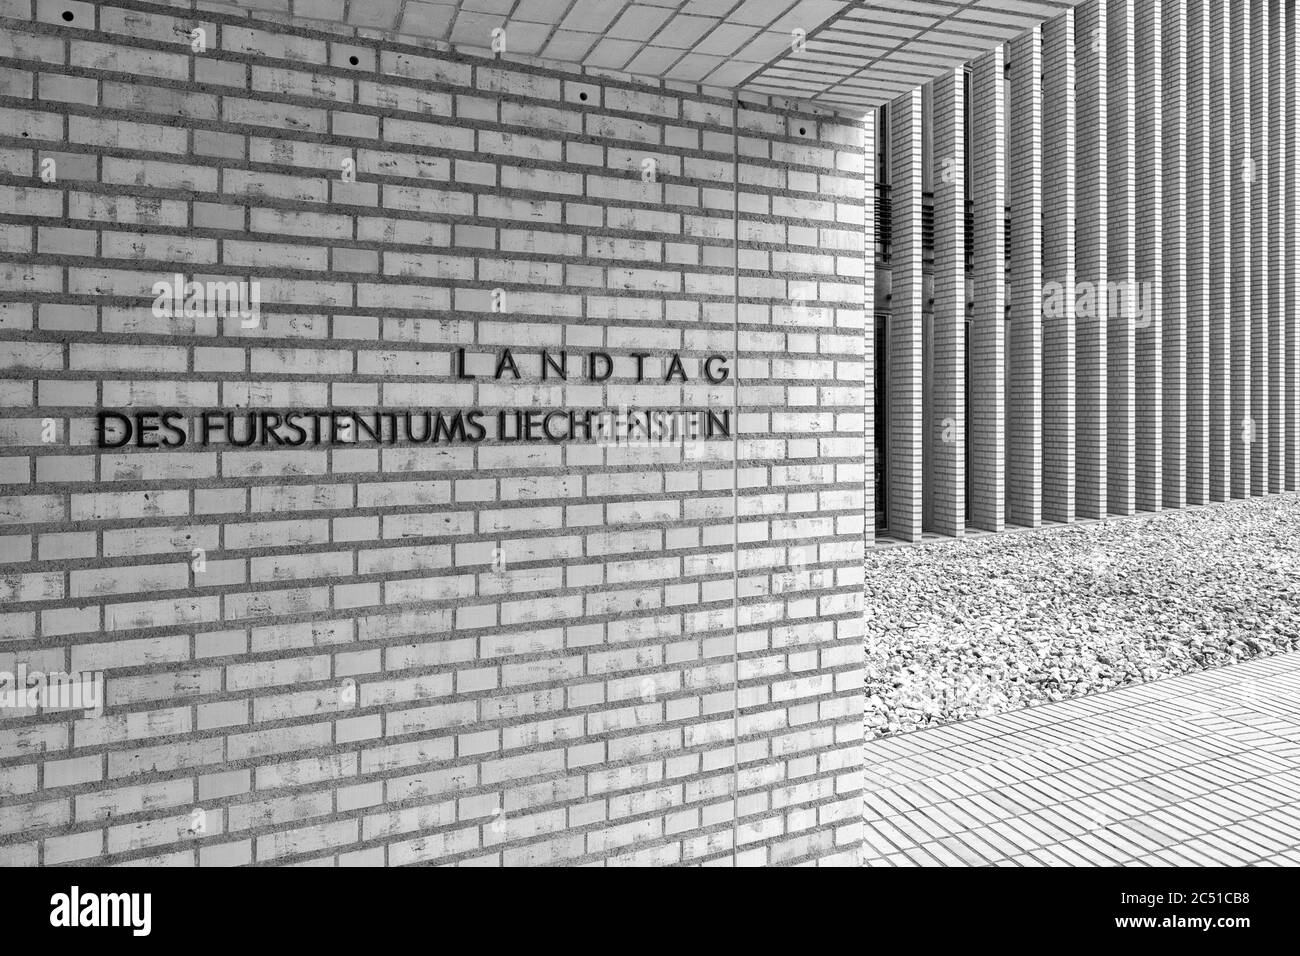 Vaduz, Liechtenstein - 16 June 2020: view of the parlament building or 'Landtag' of the Principality of Liechtenstein Stock Photo